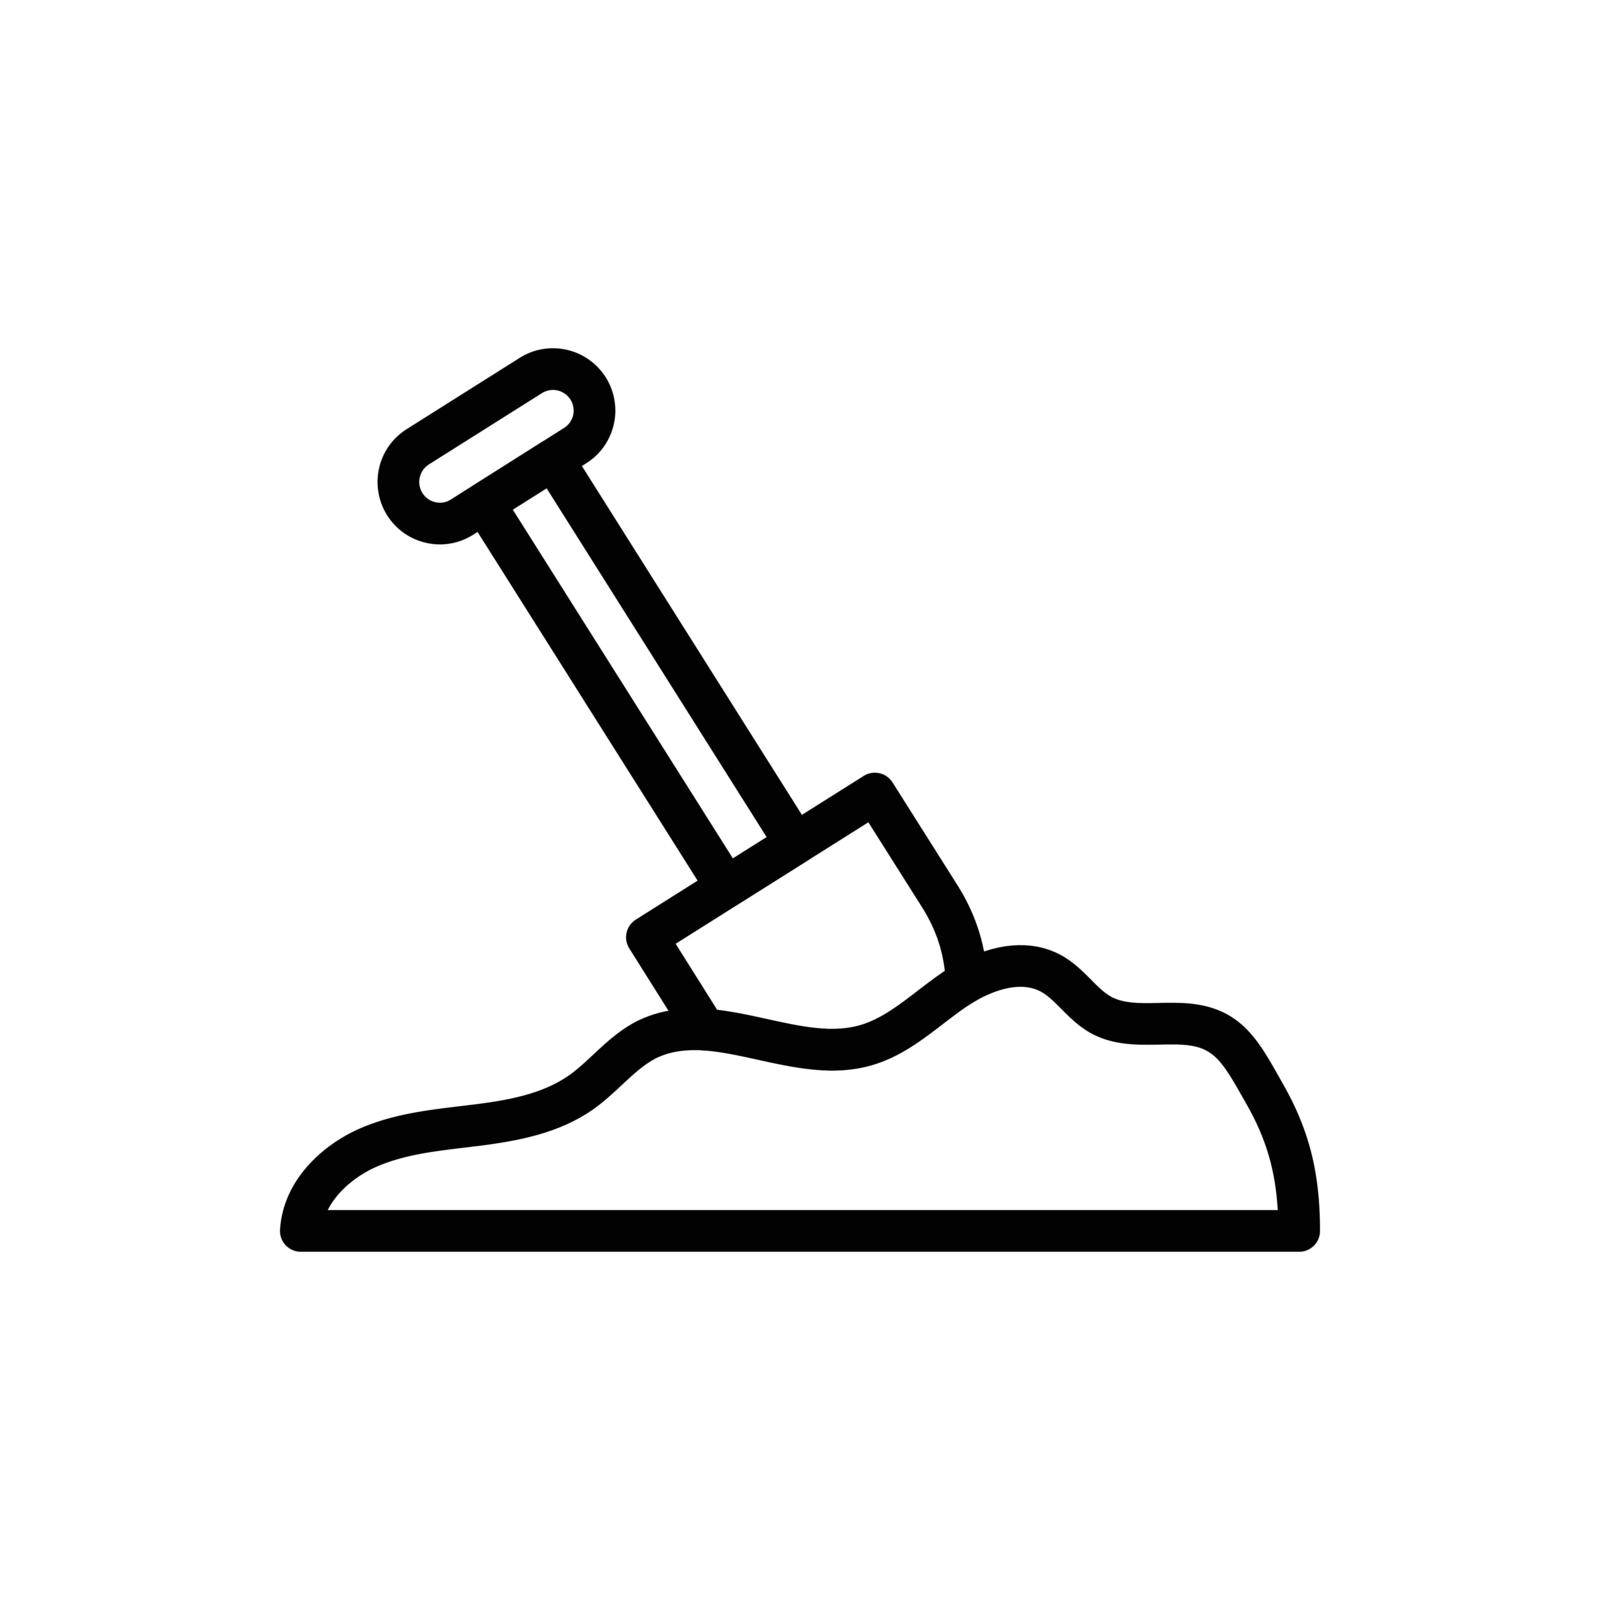 spade by FlaticonsDesign